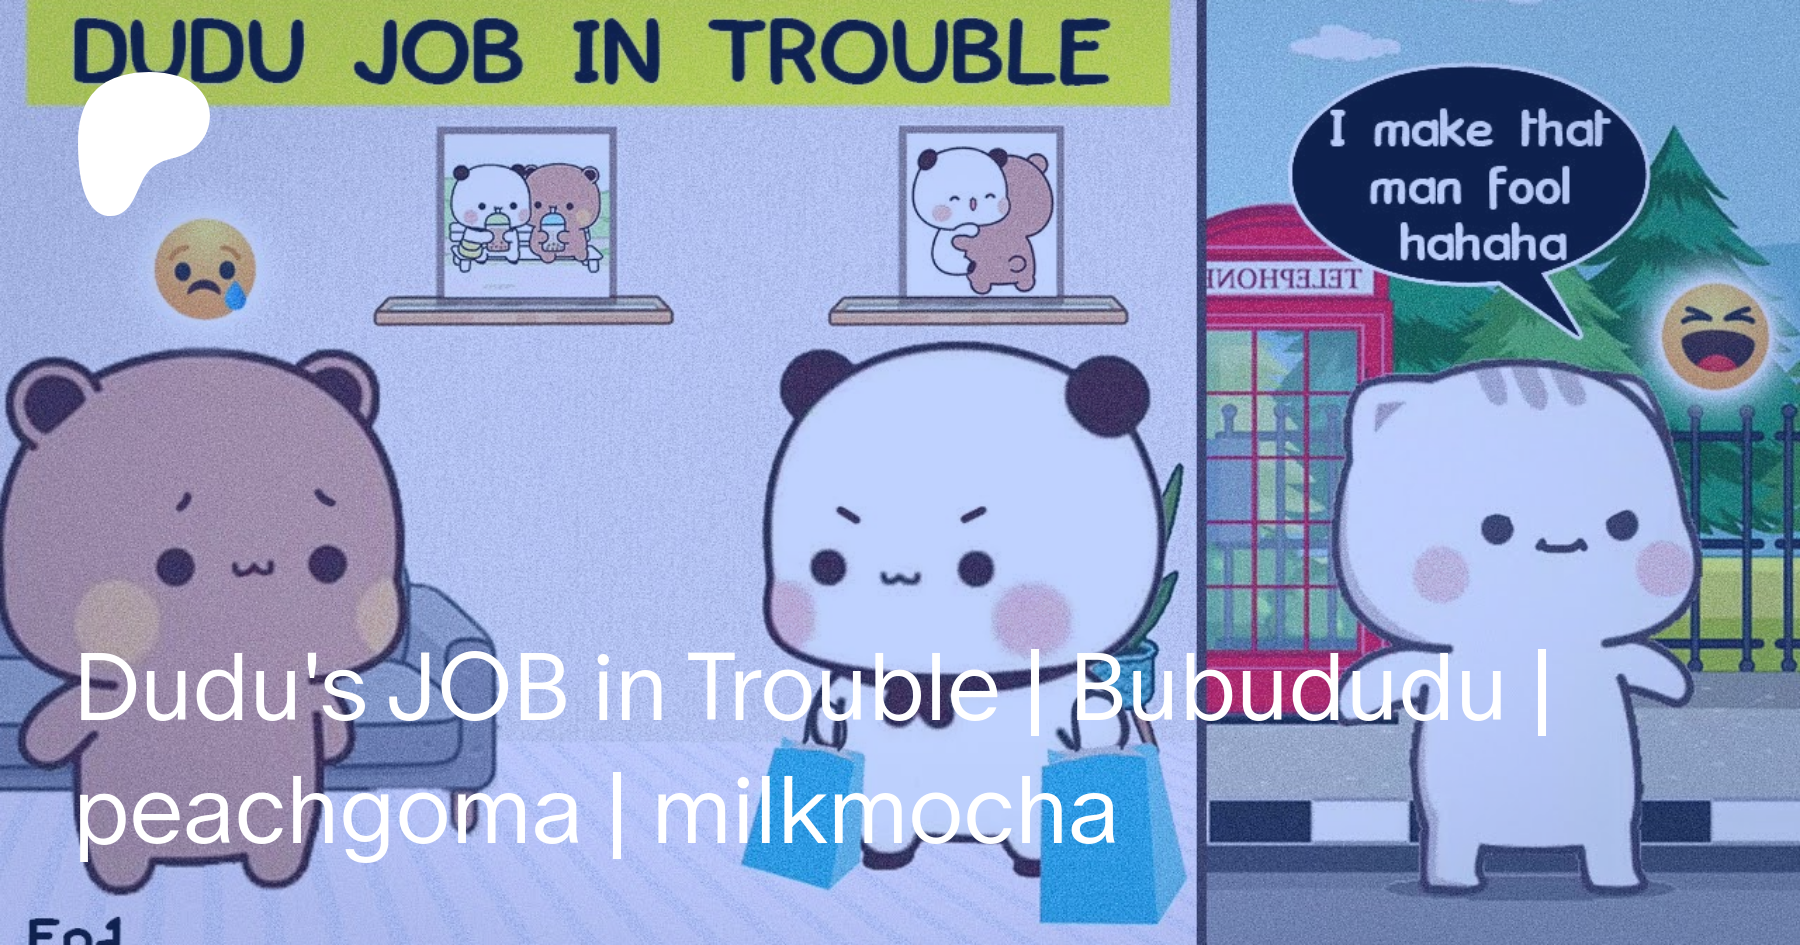 Dudu's JOB in Trouble, Bubududu, peachgoma, milkmocha